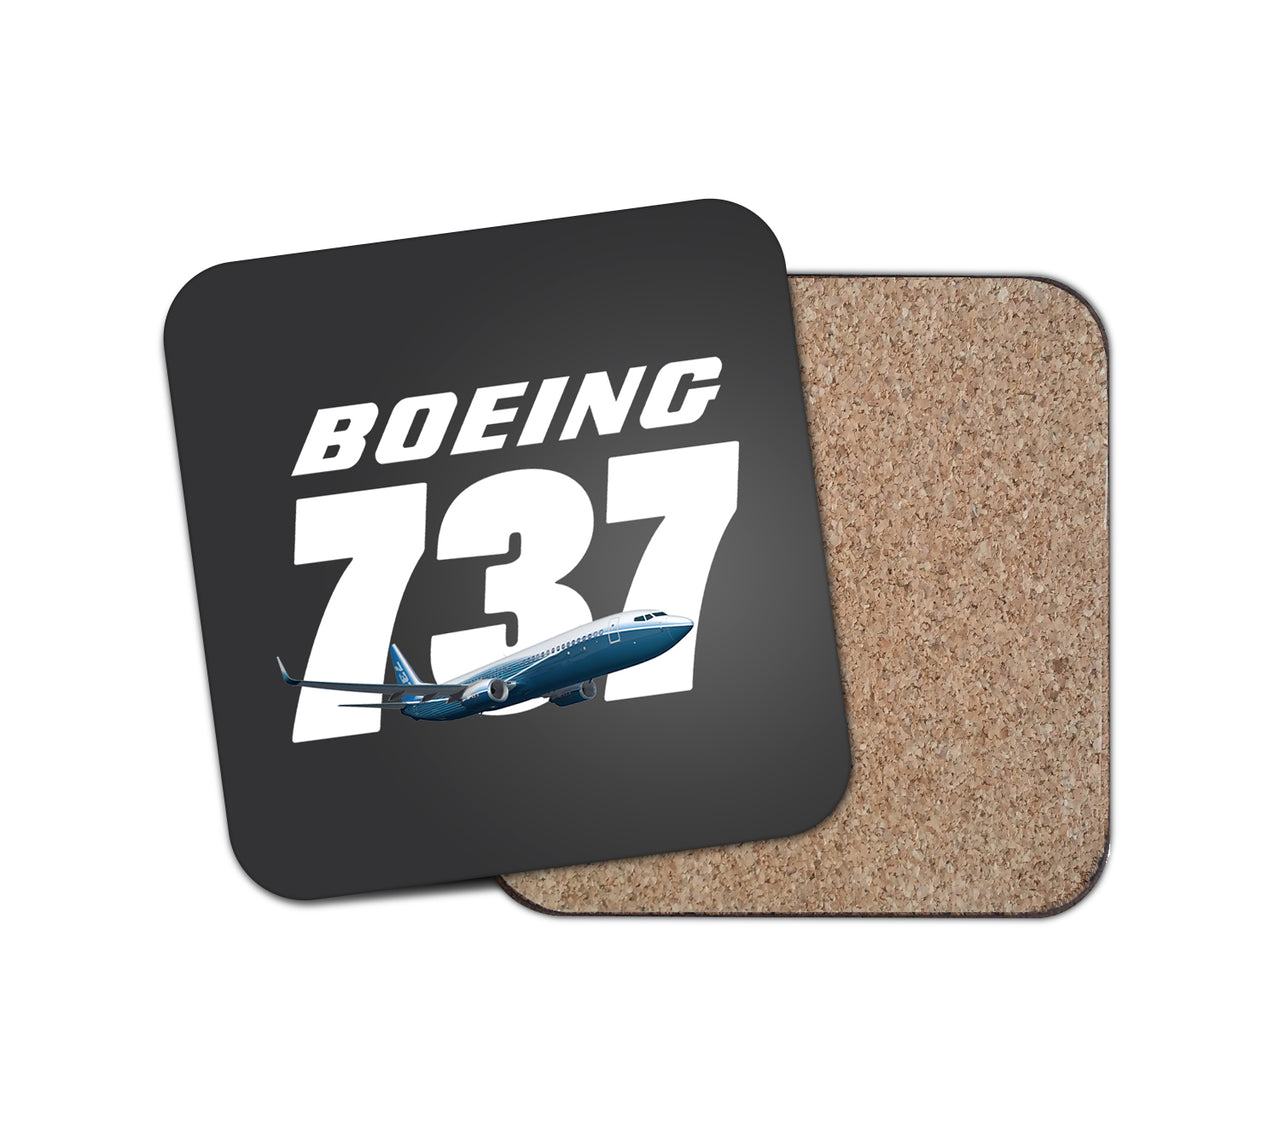 Super Boeing 737+Text Designed Coasters